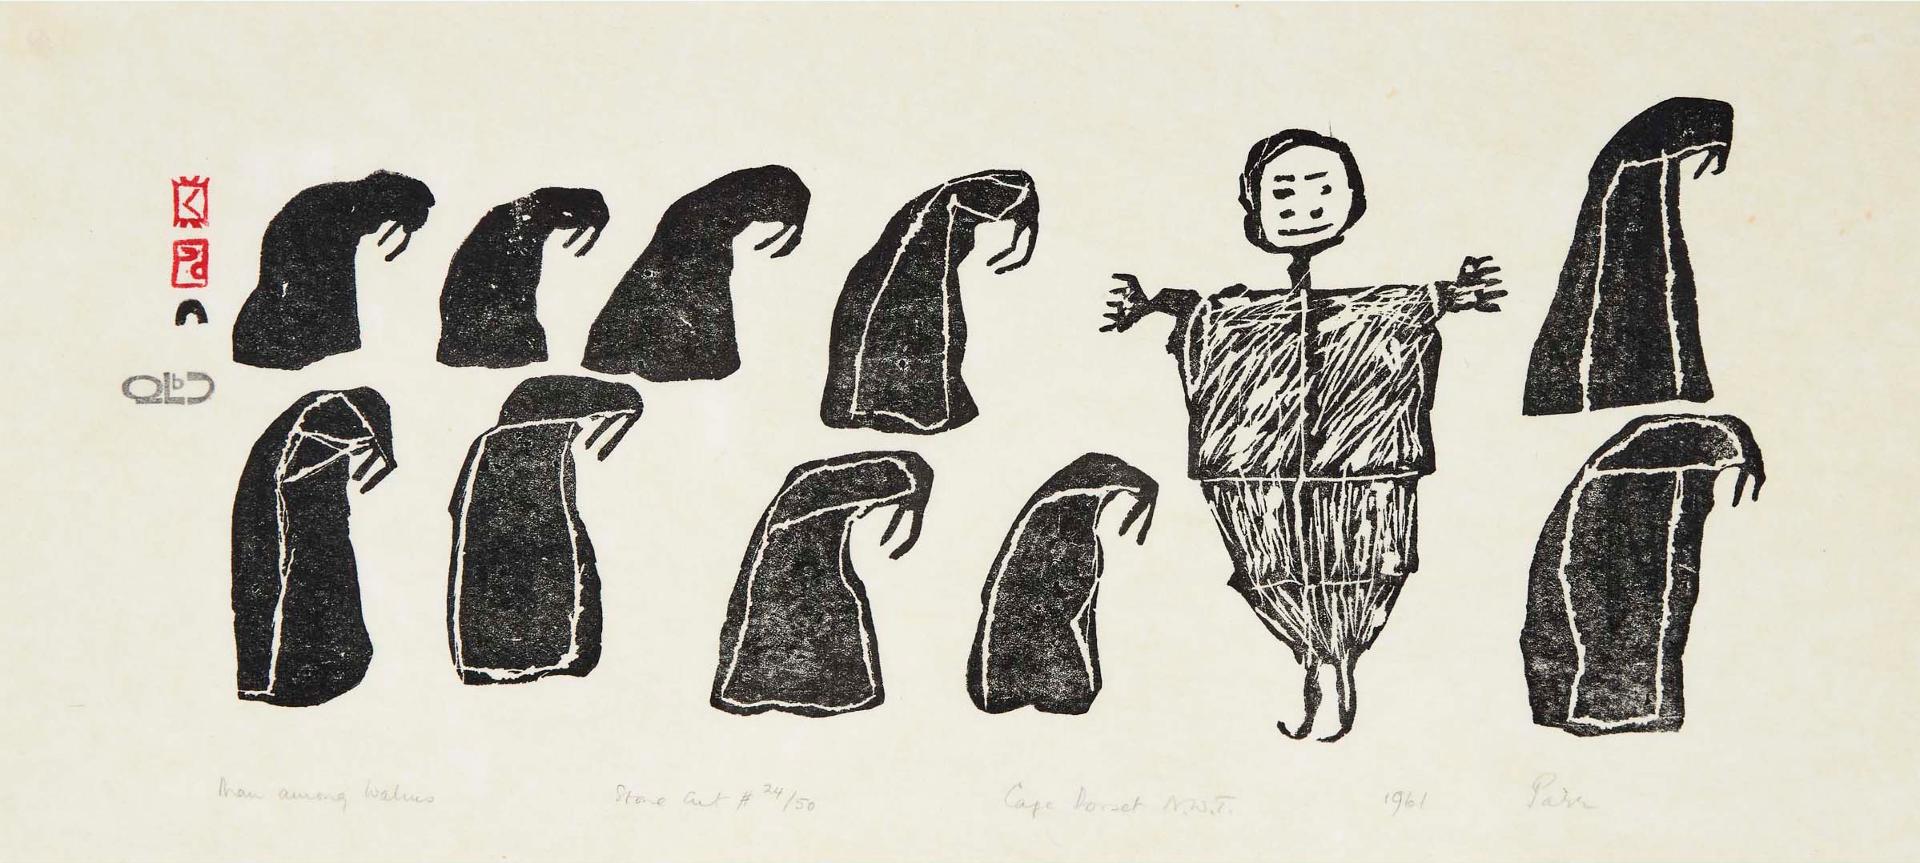 Parr (1893-1969) - Man Among Walrus, 1961